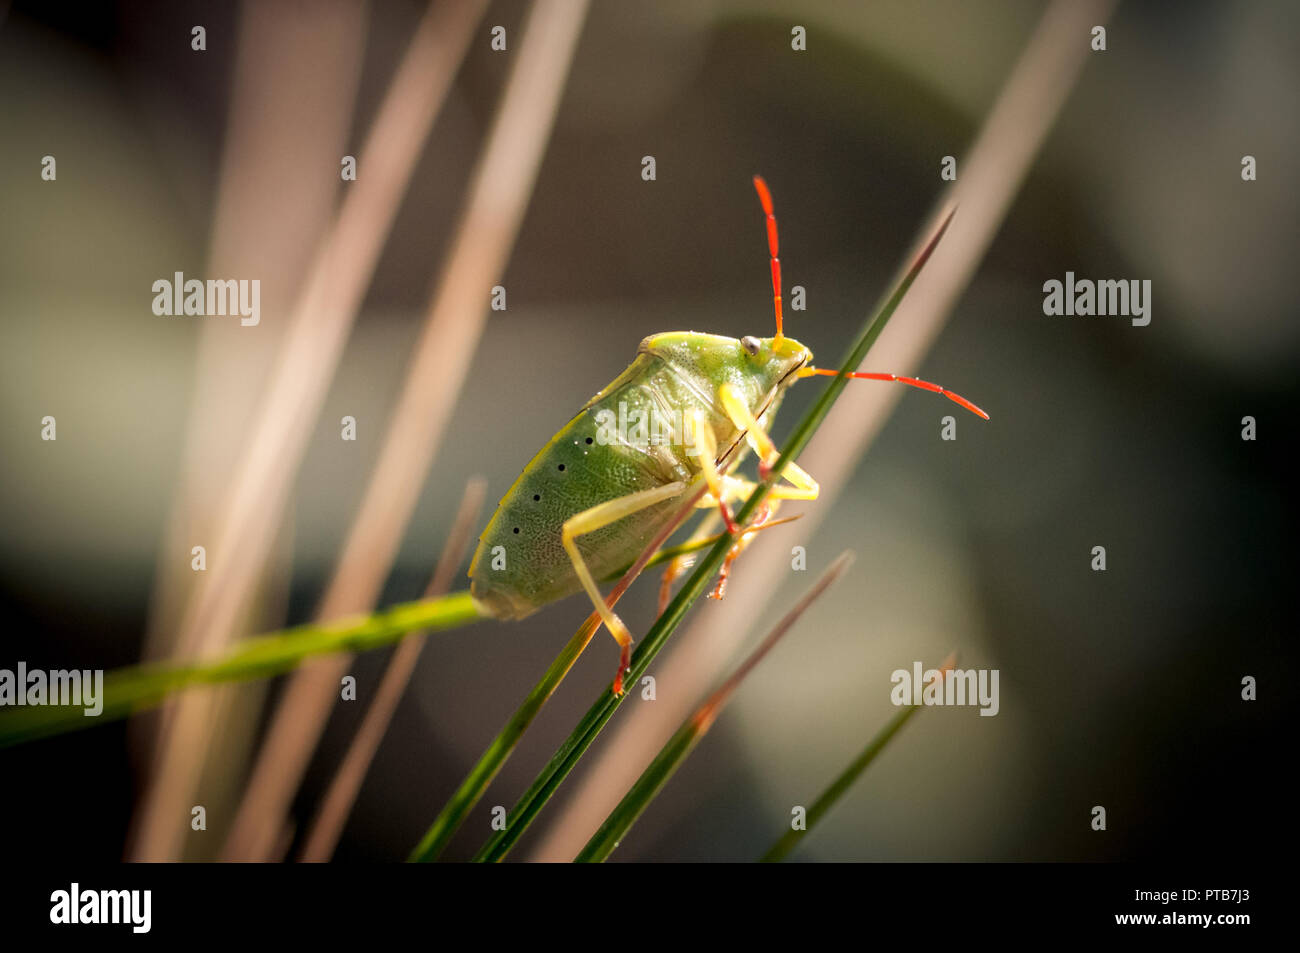 Macro shot showing green bedbug in a natural scene Stock Photo